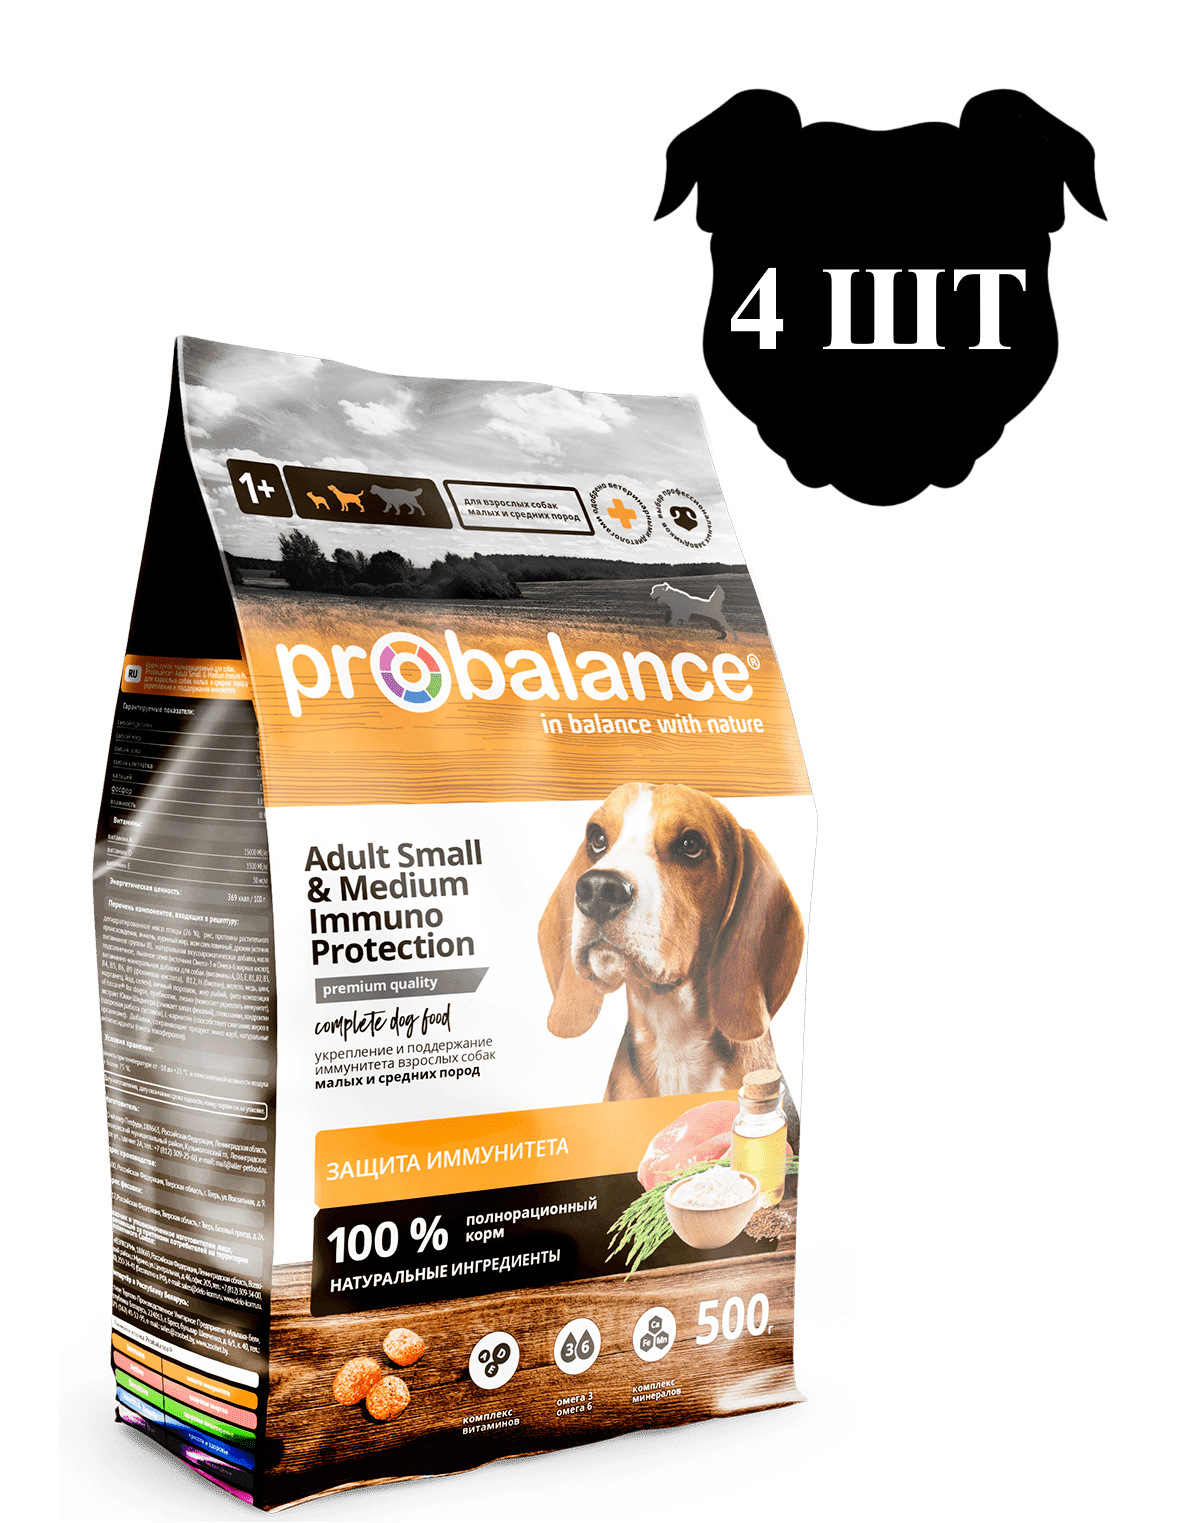 Сухой корм для собак ProBalance Immuno Adult Small and Medium для иммунитета, 4шт по 0,5кг